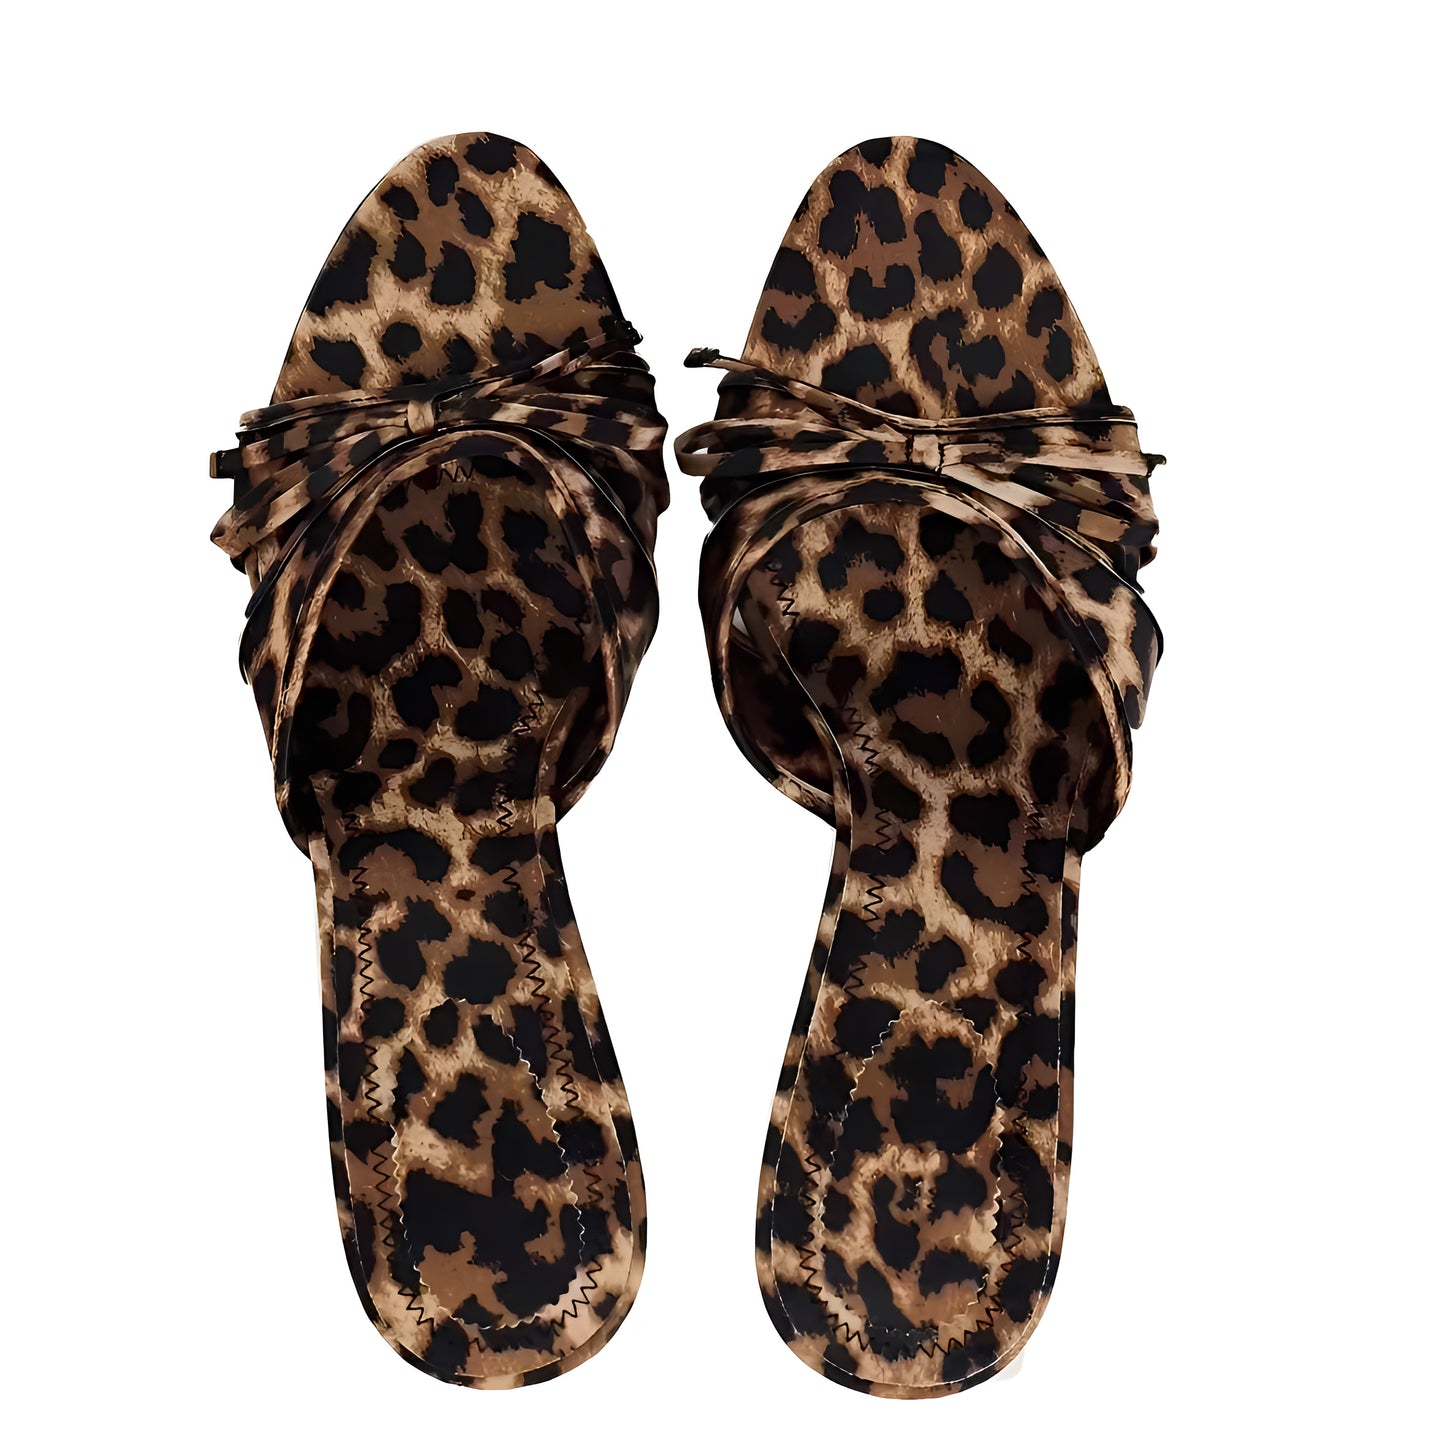 Leopard Print Bow Faux Leather Open-Toe Stiletto High Heels